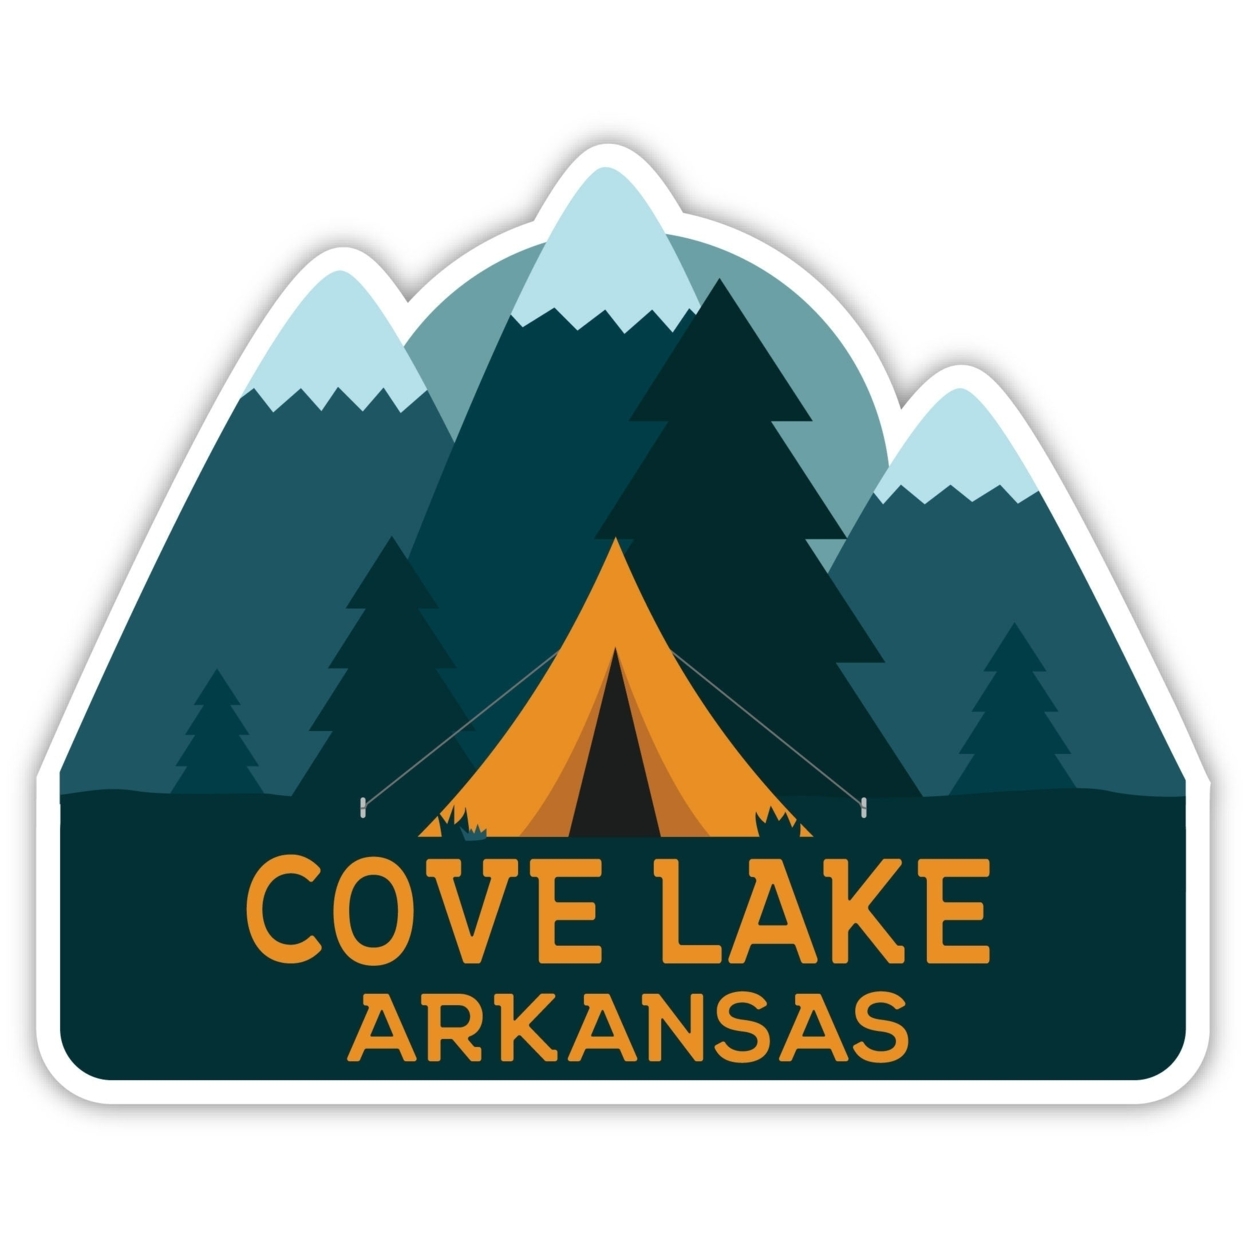 Cove Lake Arkansas Souvenir Decorative Stickers (Choose Theme And Size) - 4-Pack, 10-Inch, Tent